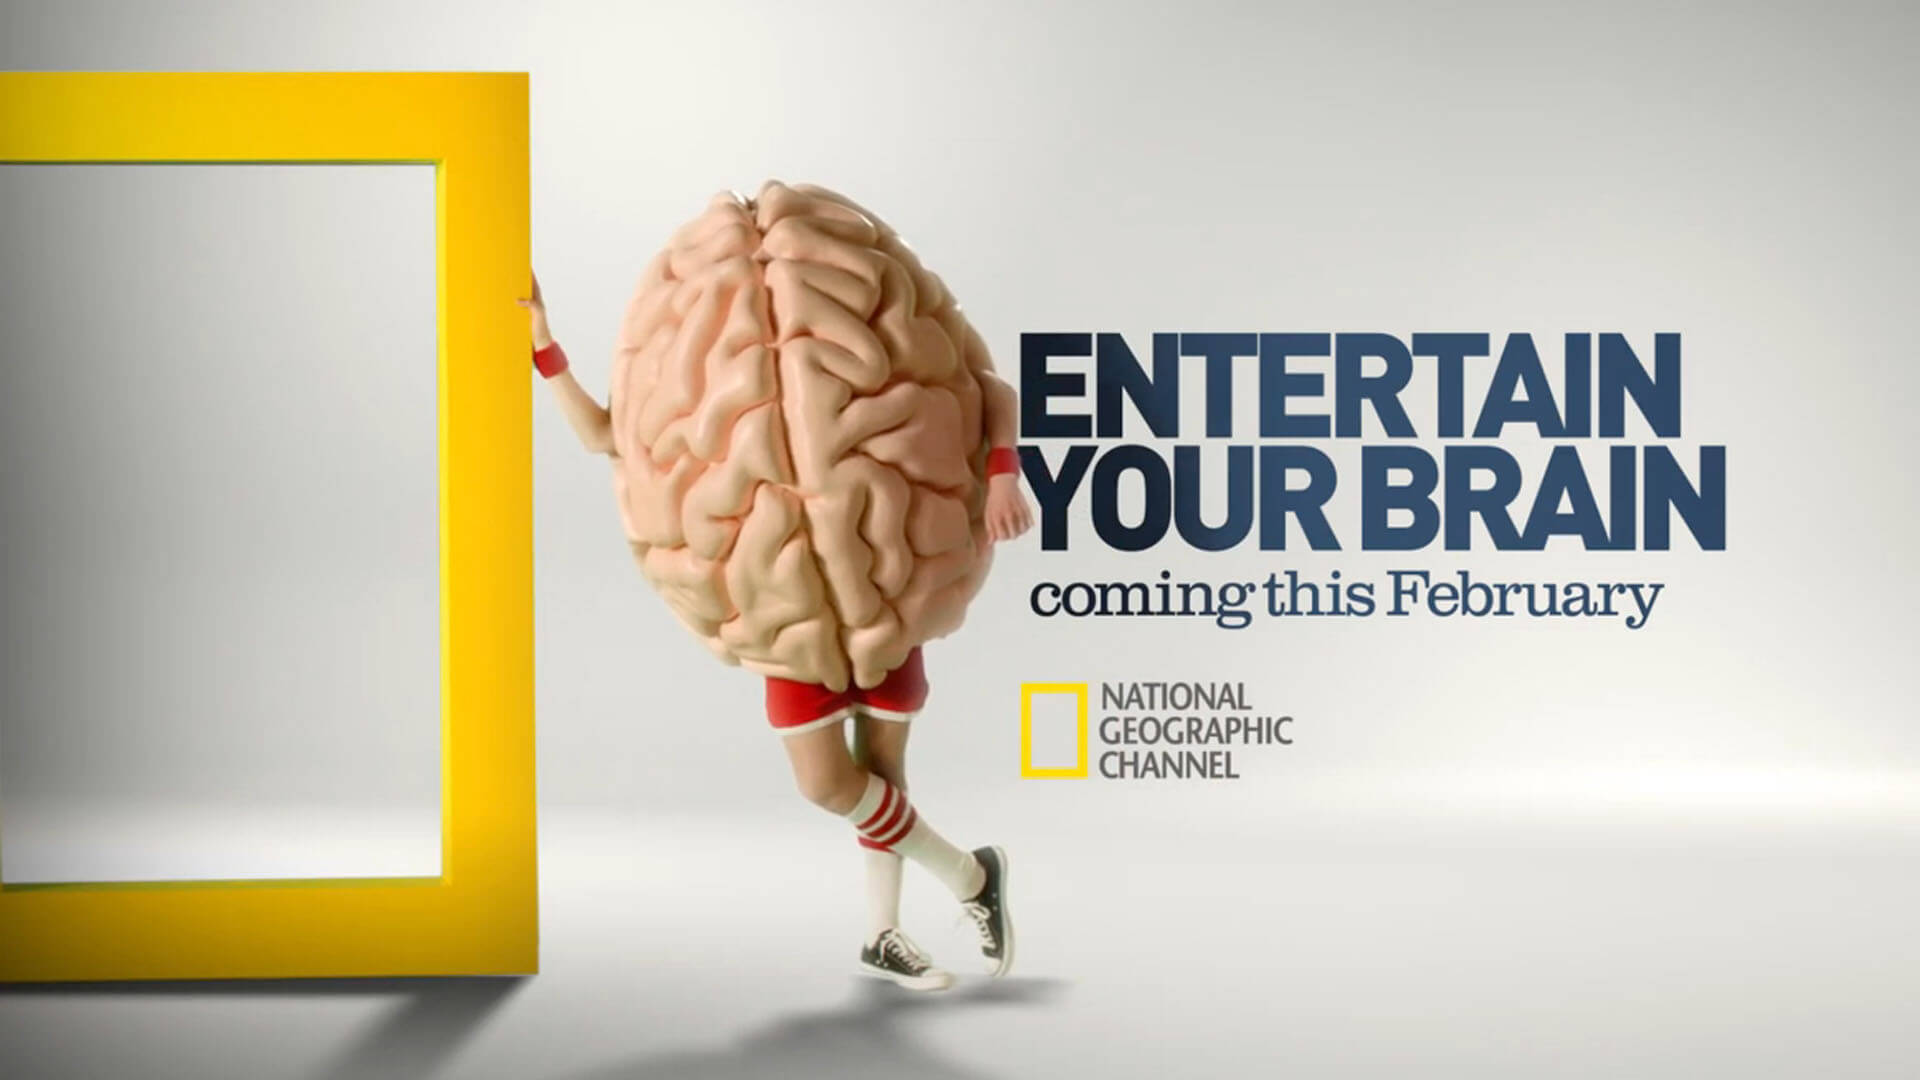 Реклама brain. Мозг креатив. Реклама и мозг. Креативная реклама книг. Реклама National Geographic.